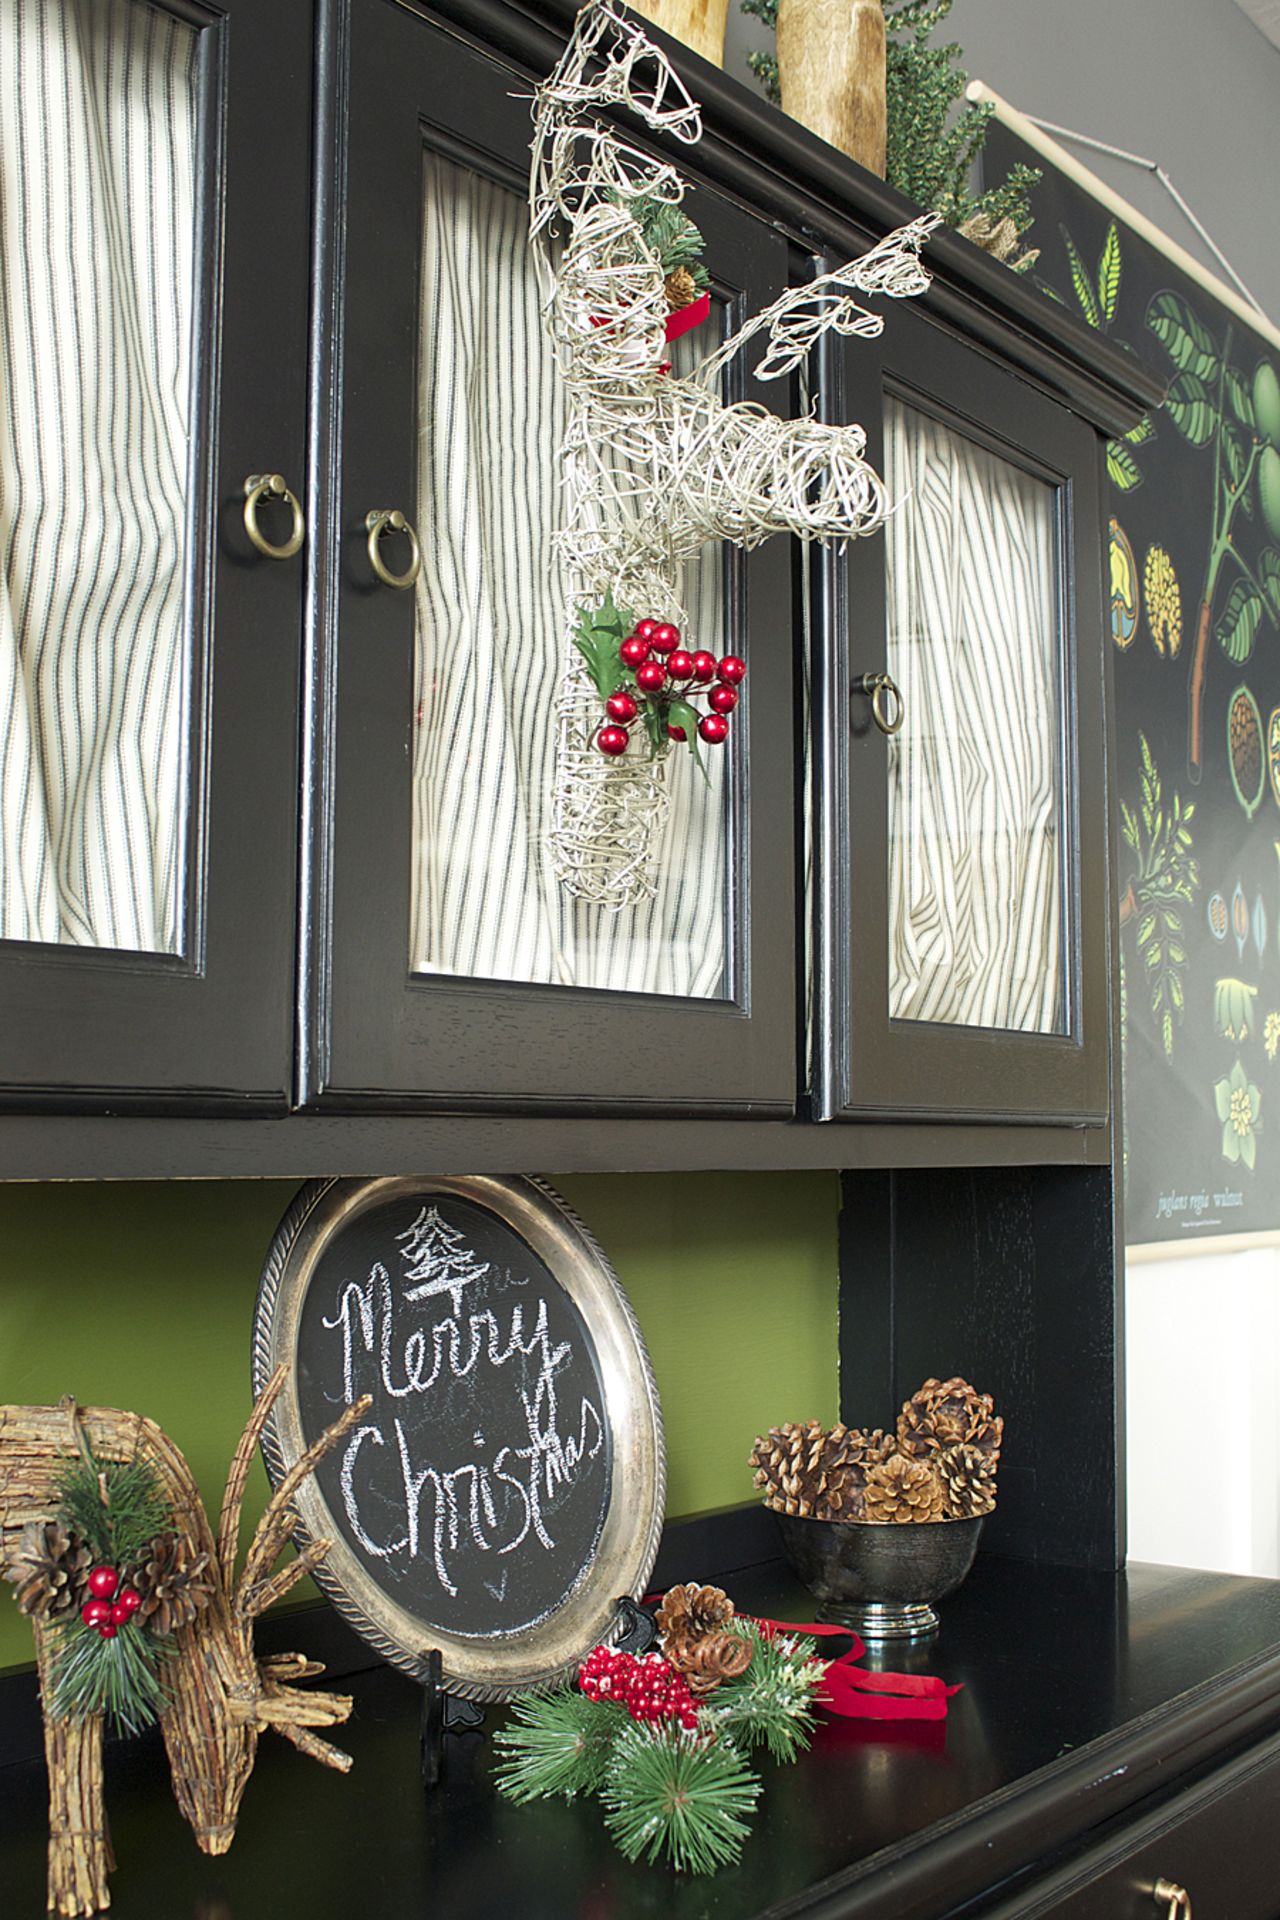 A trophy deer head made of vine lends a whimsical take on woodland Christmas decor.